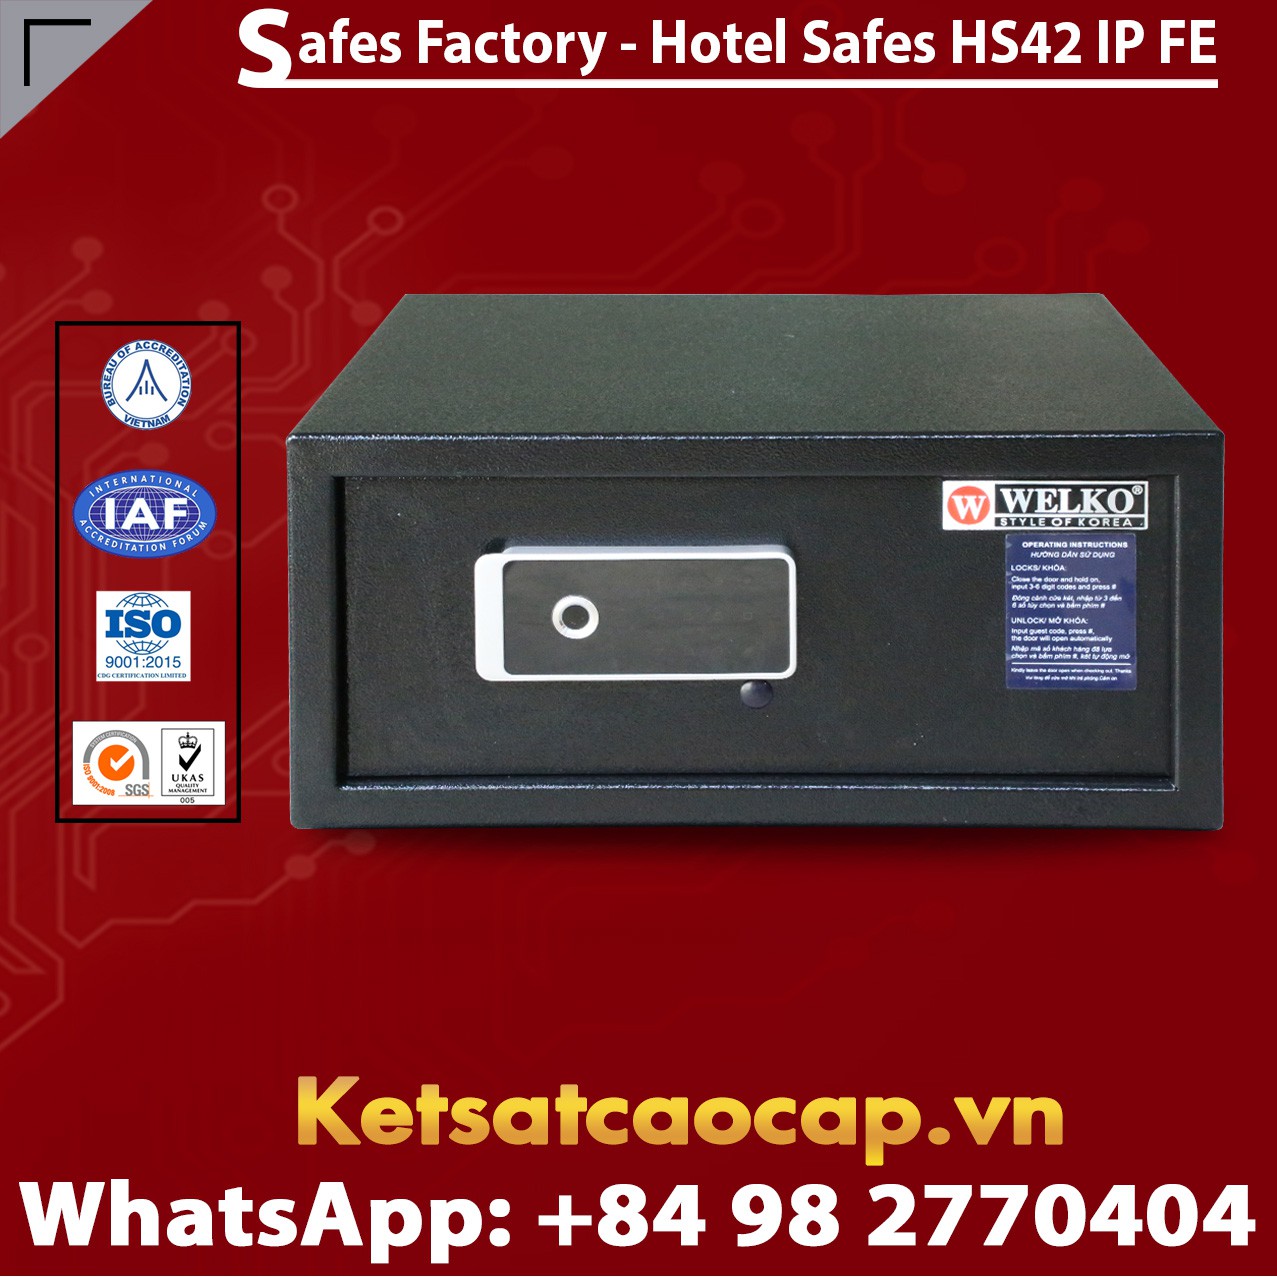 Portable Hotel Safes WELKO HS42 IP FE